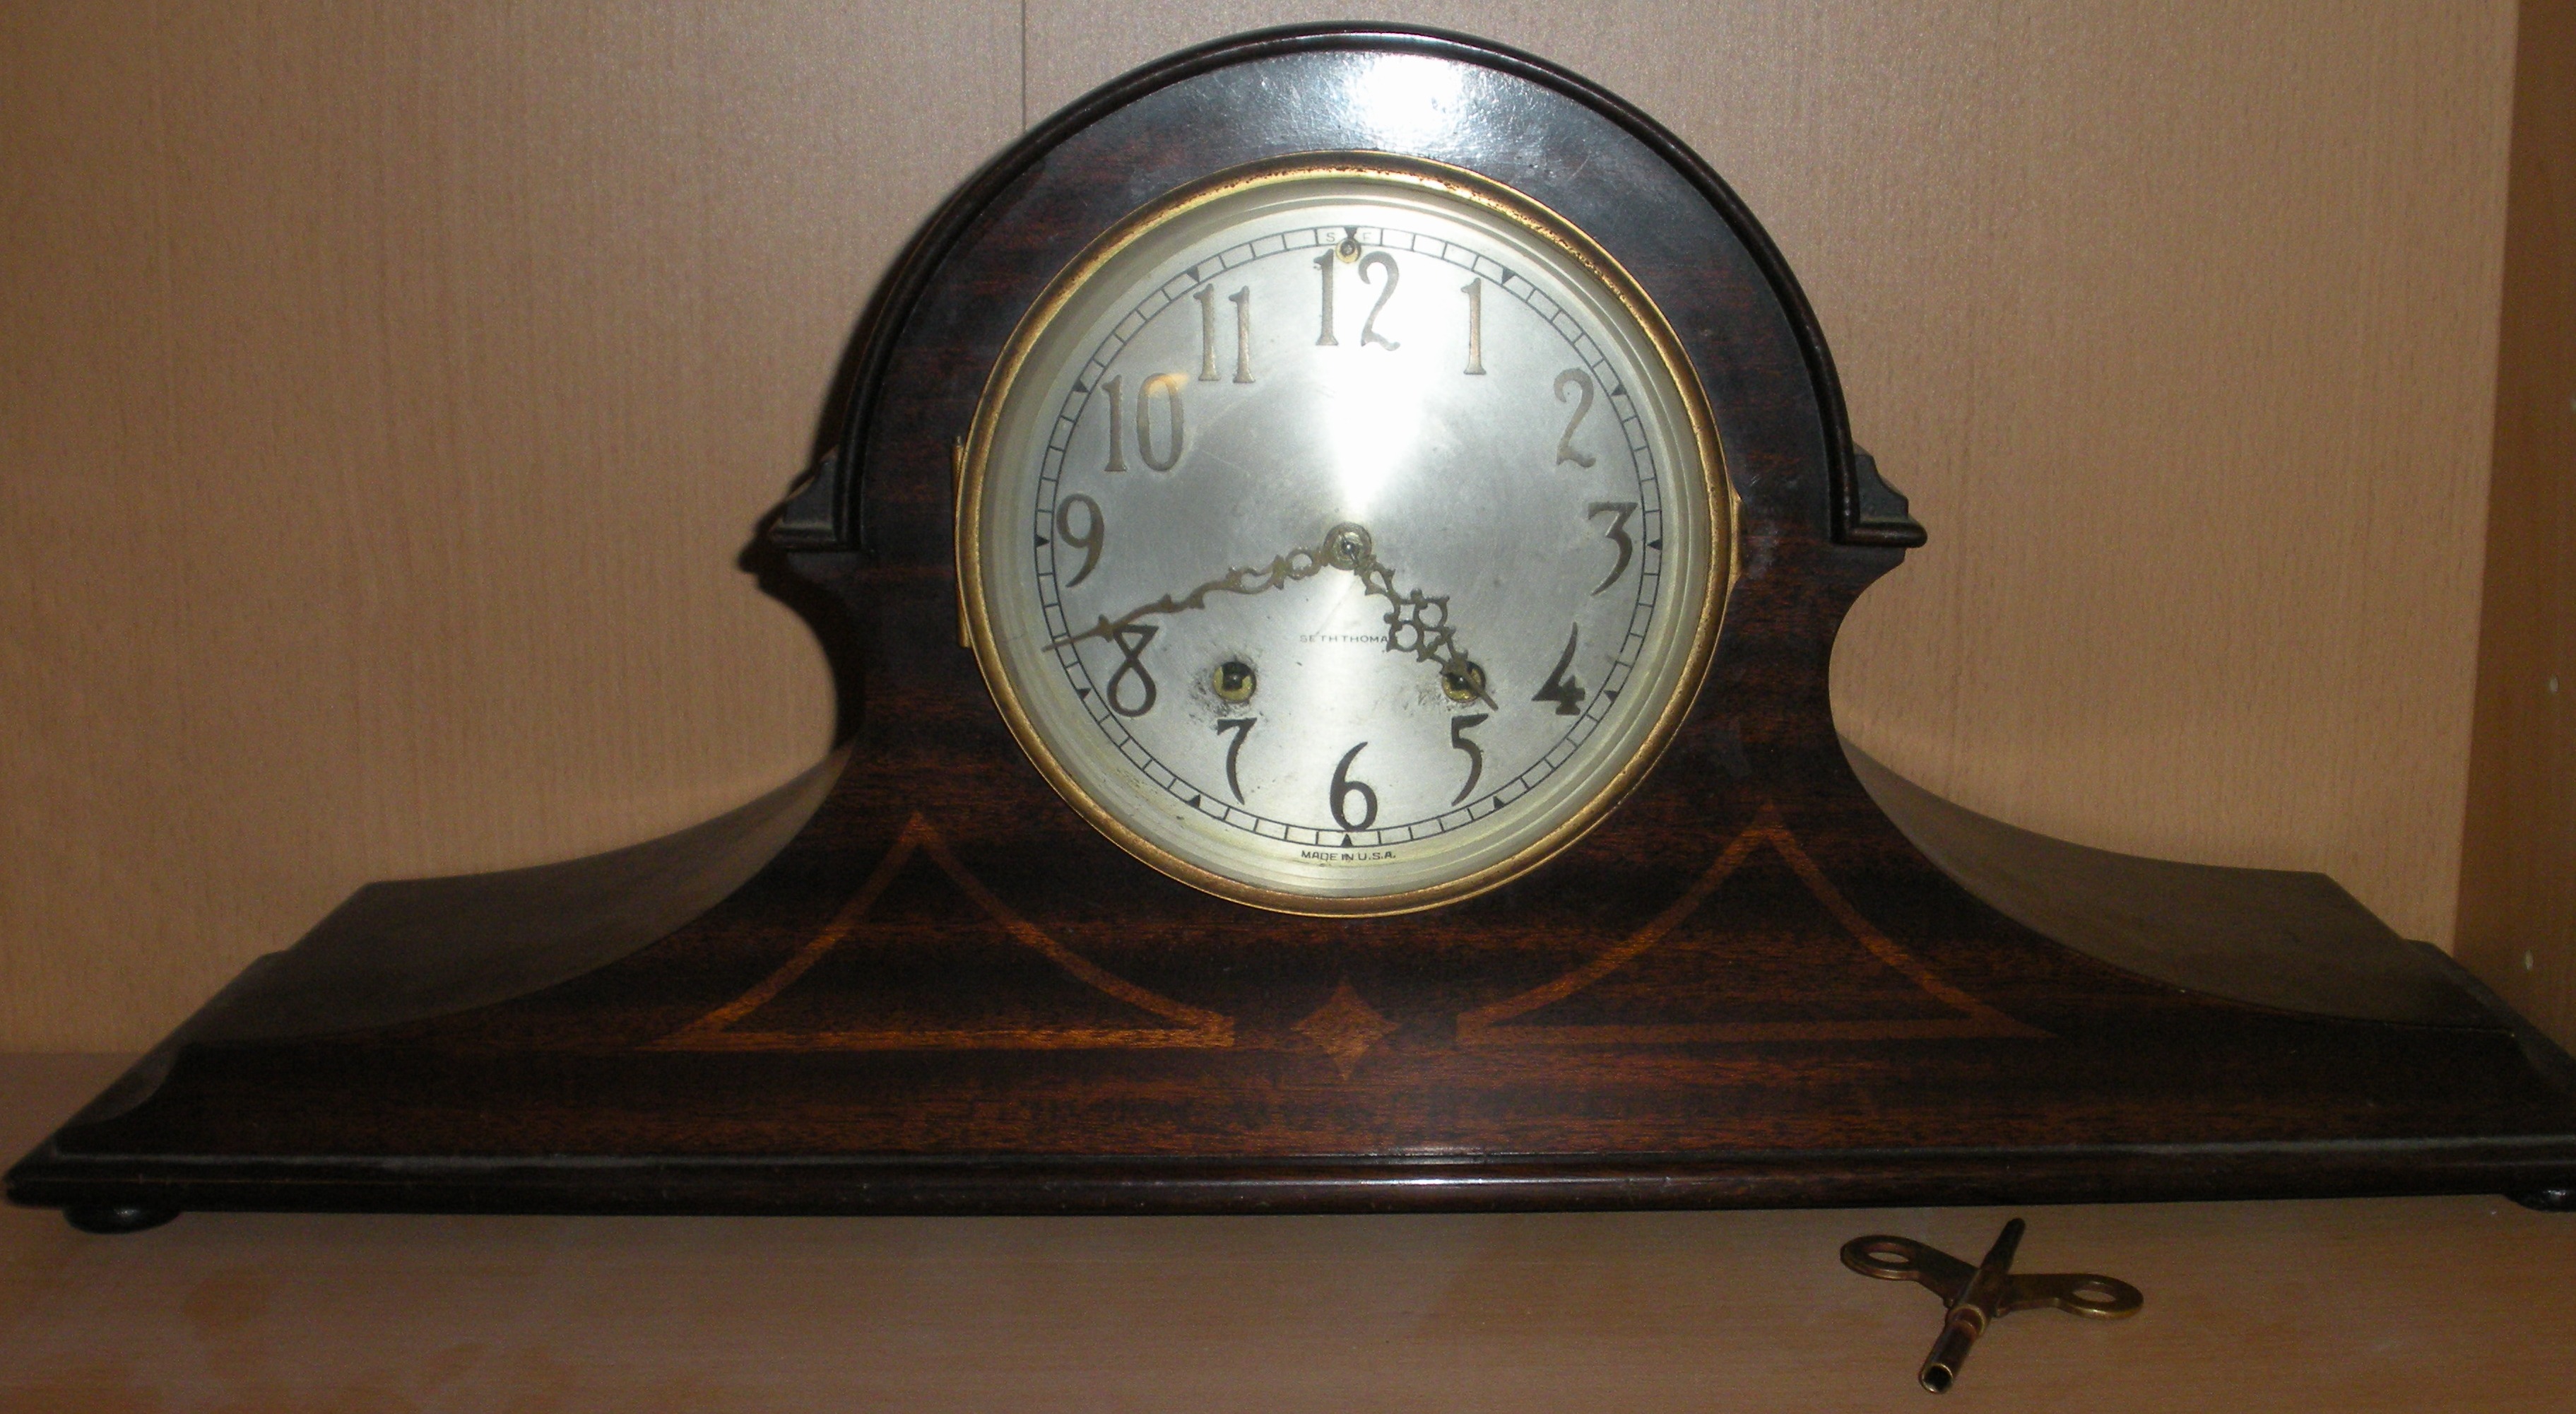 Mantel Clocks Mantel clock - Wikipedia